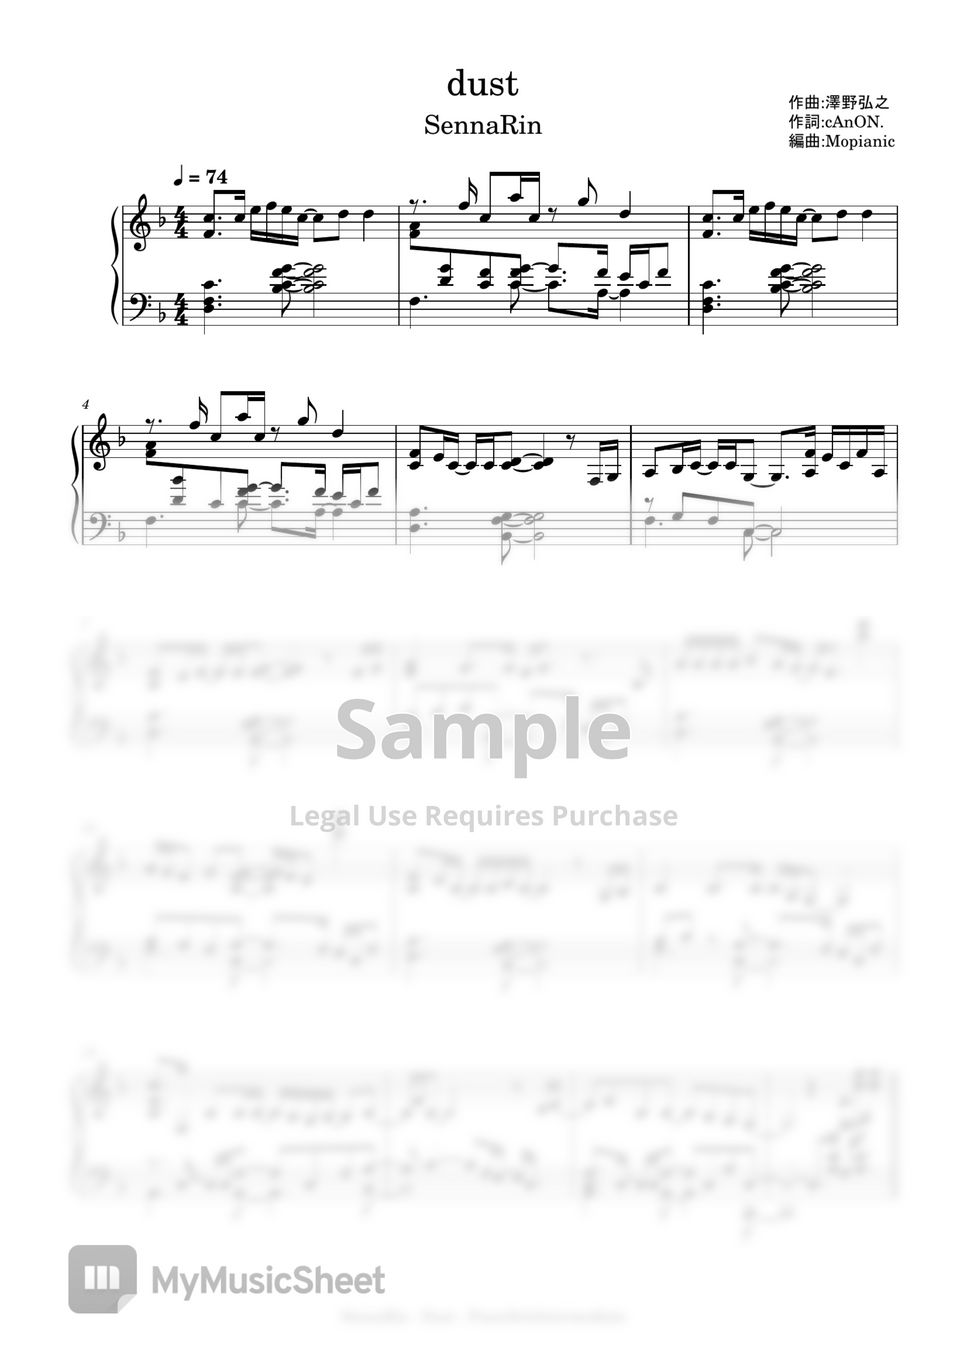 SennaRin - dust (intermediate, piano) by Mopianic